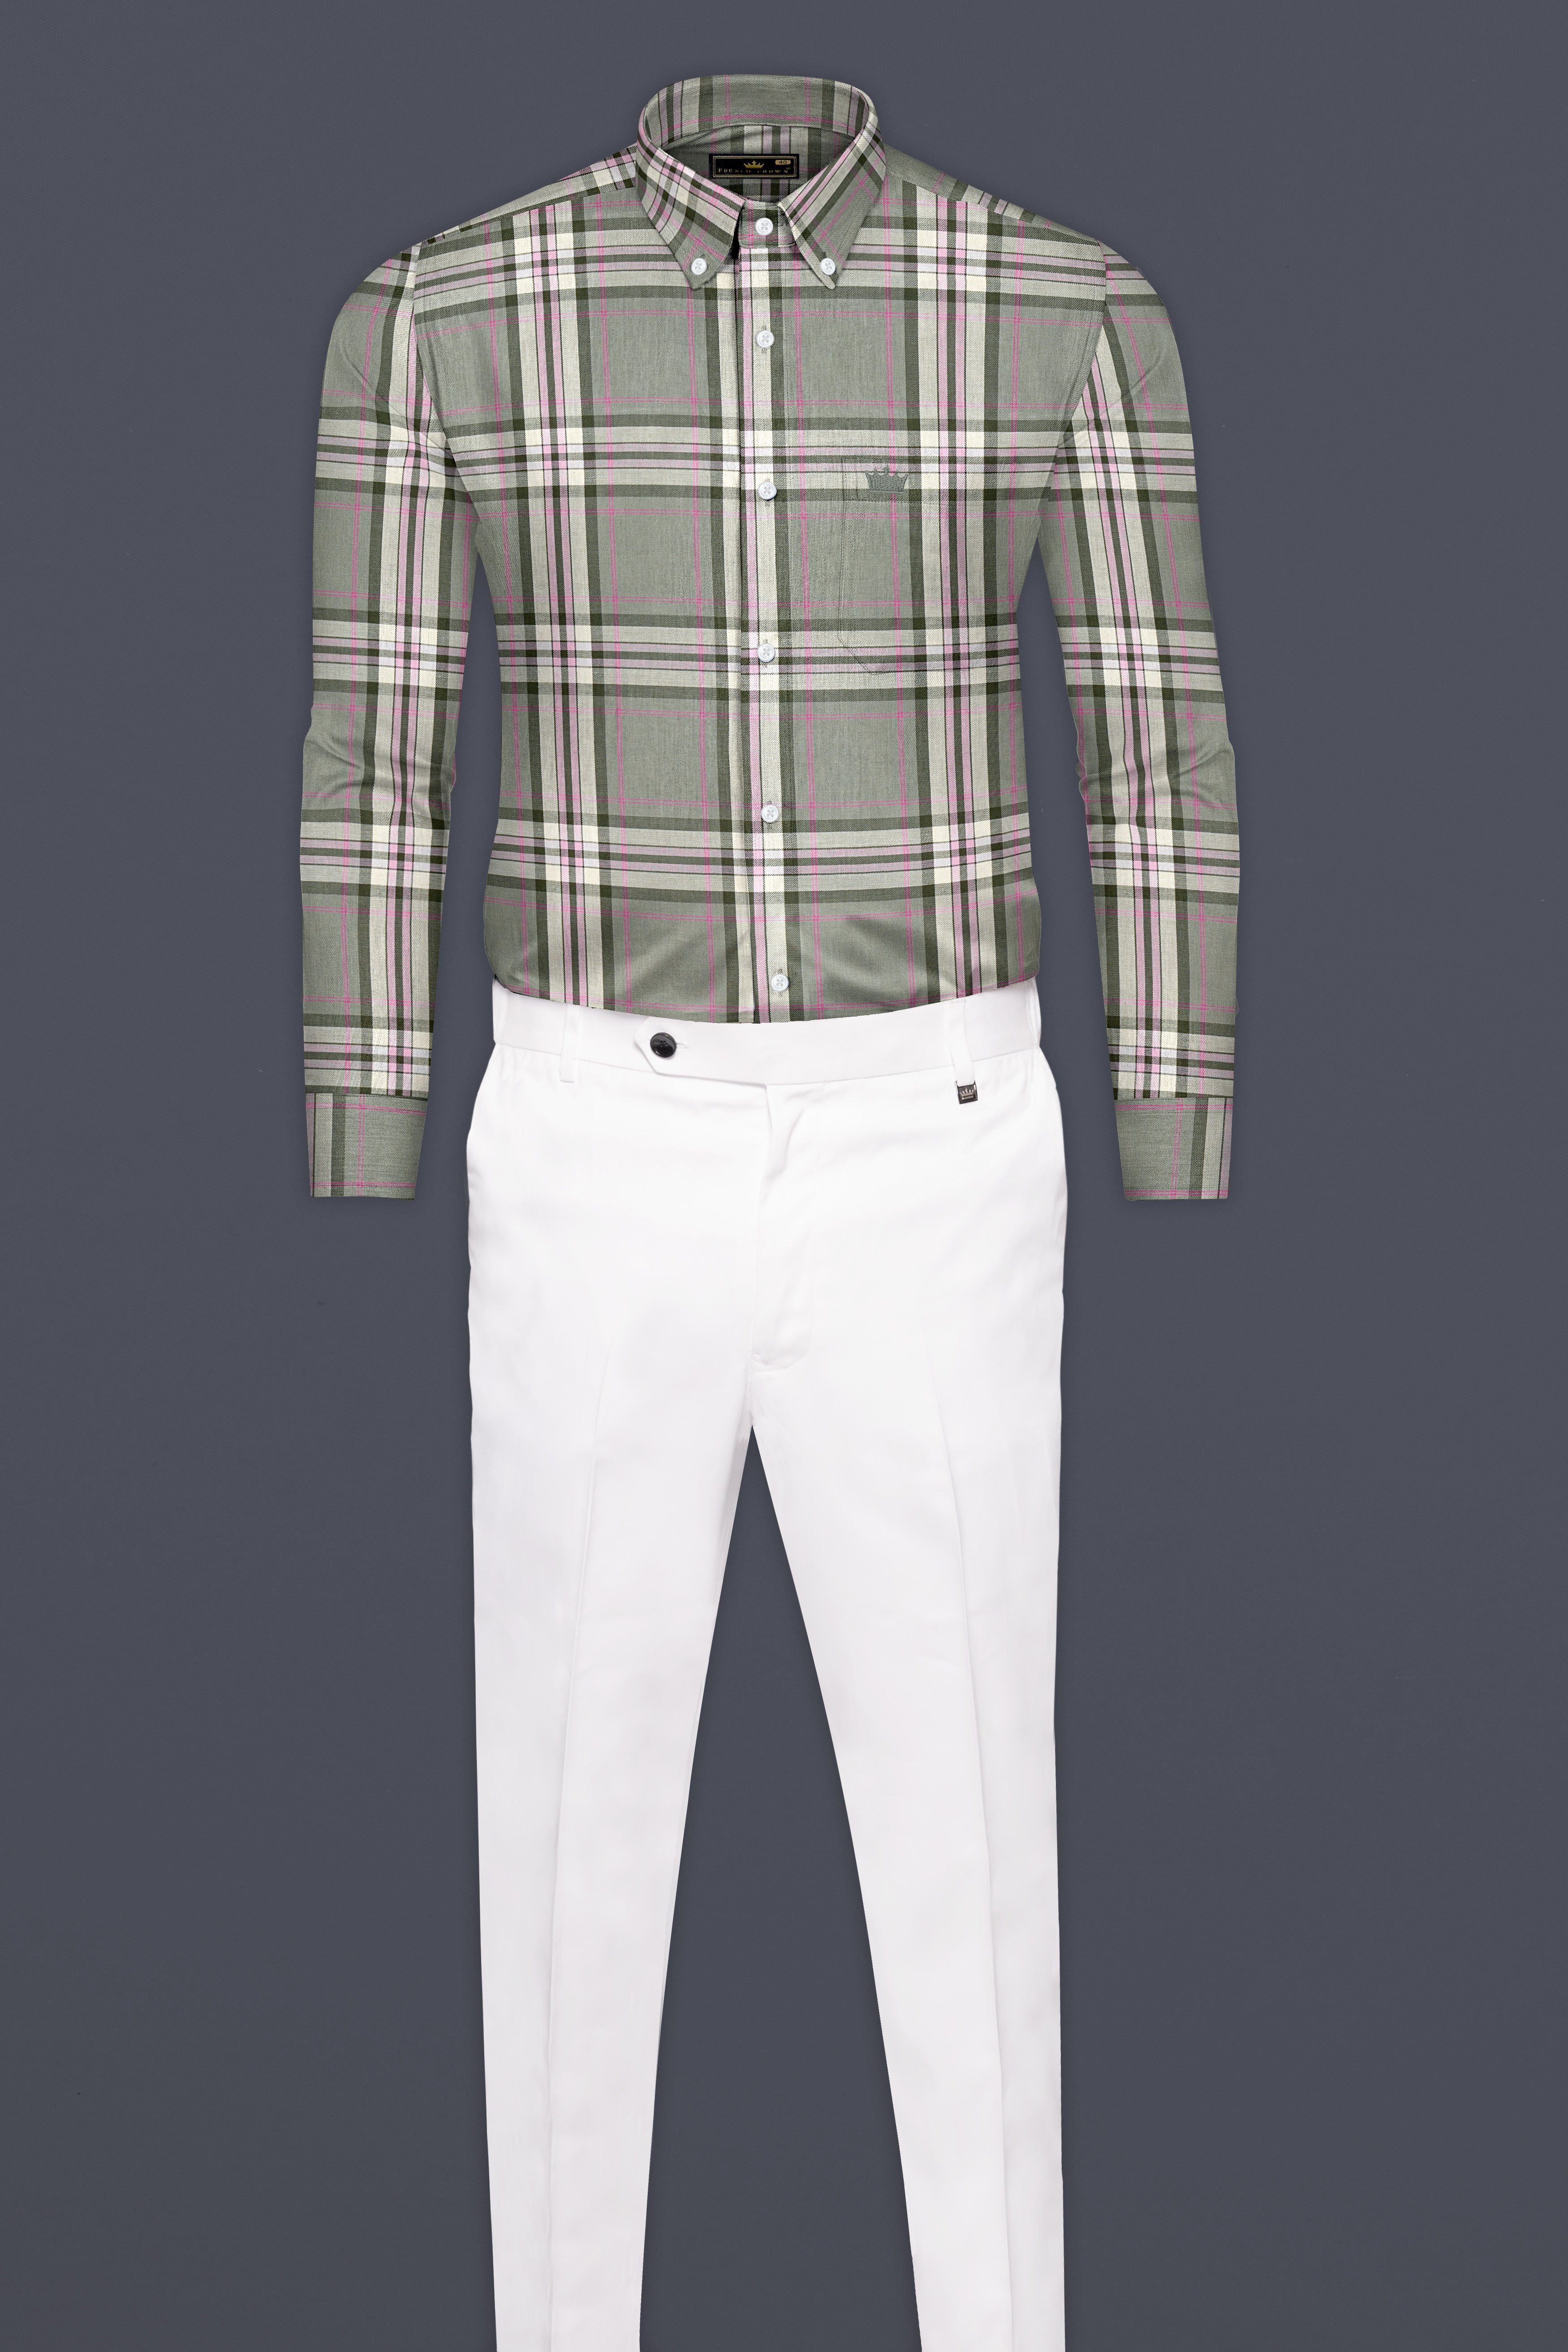 Sandrift Brown with Mondo Green Twill Checkered Premium Cotton Shirt